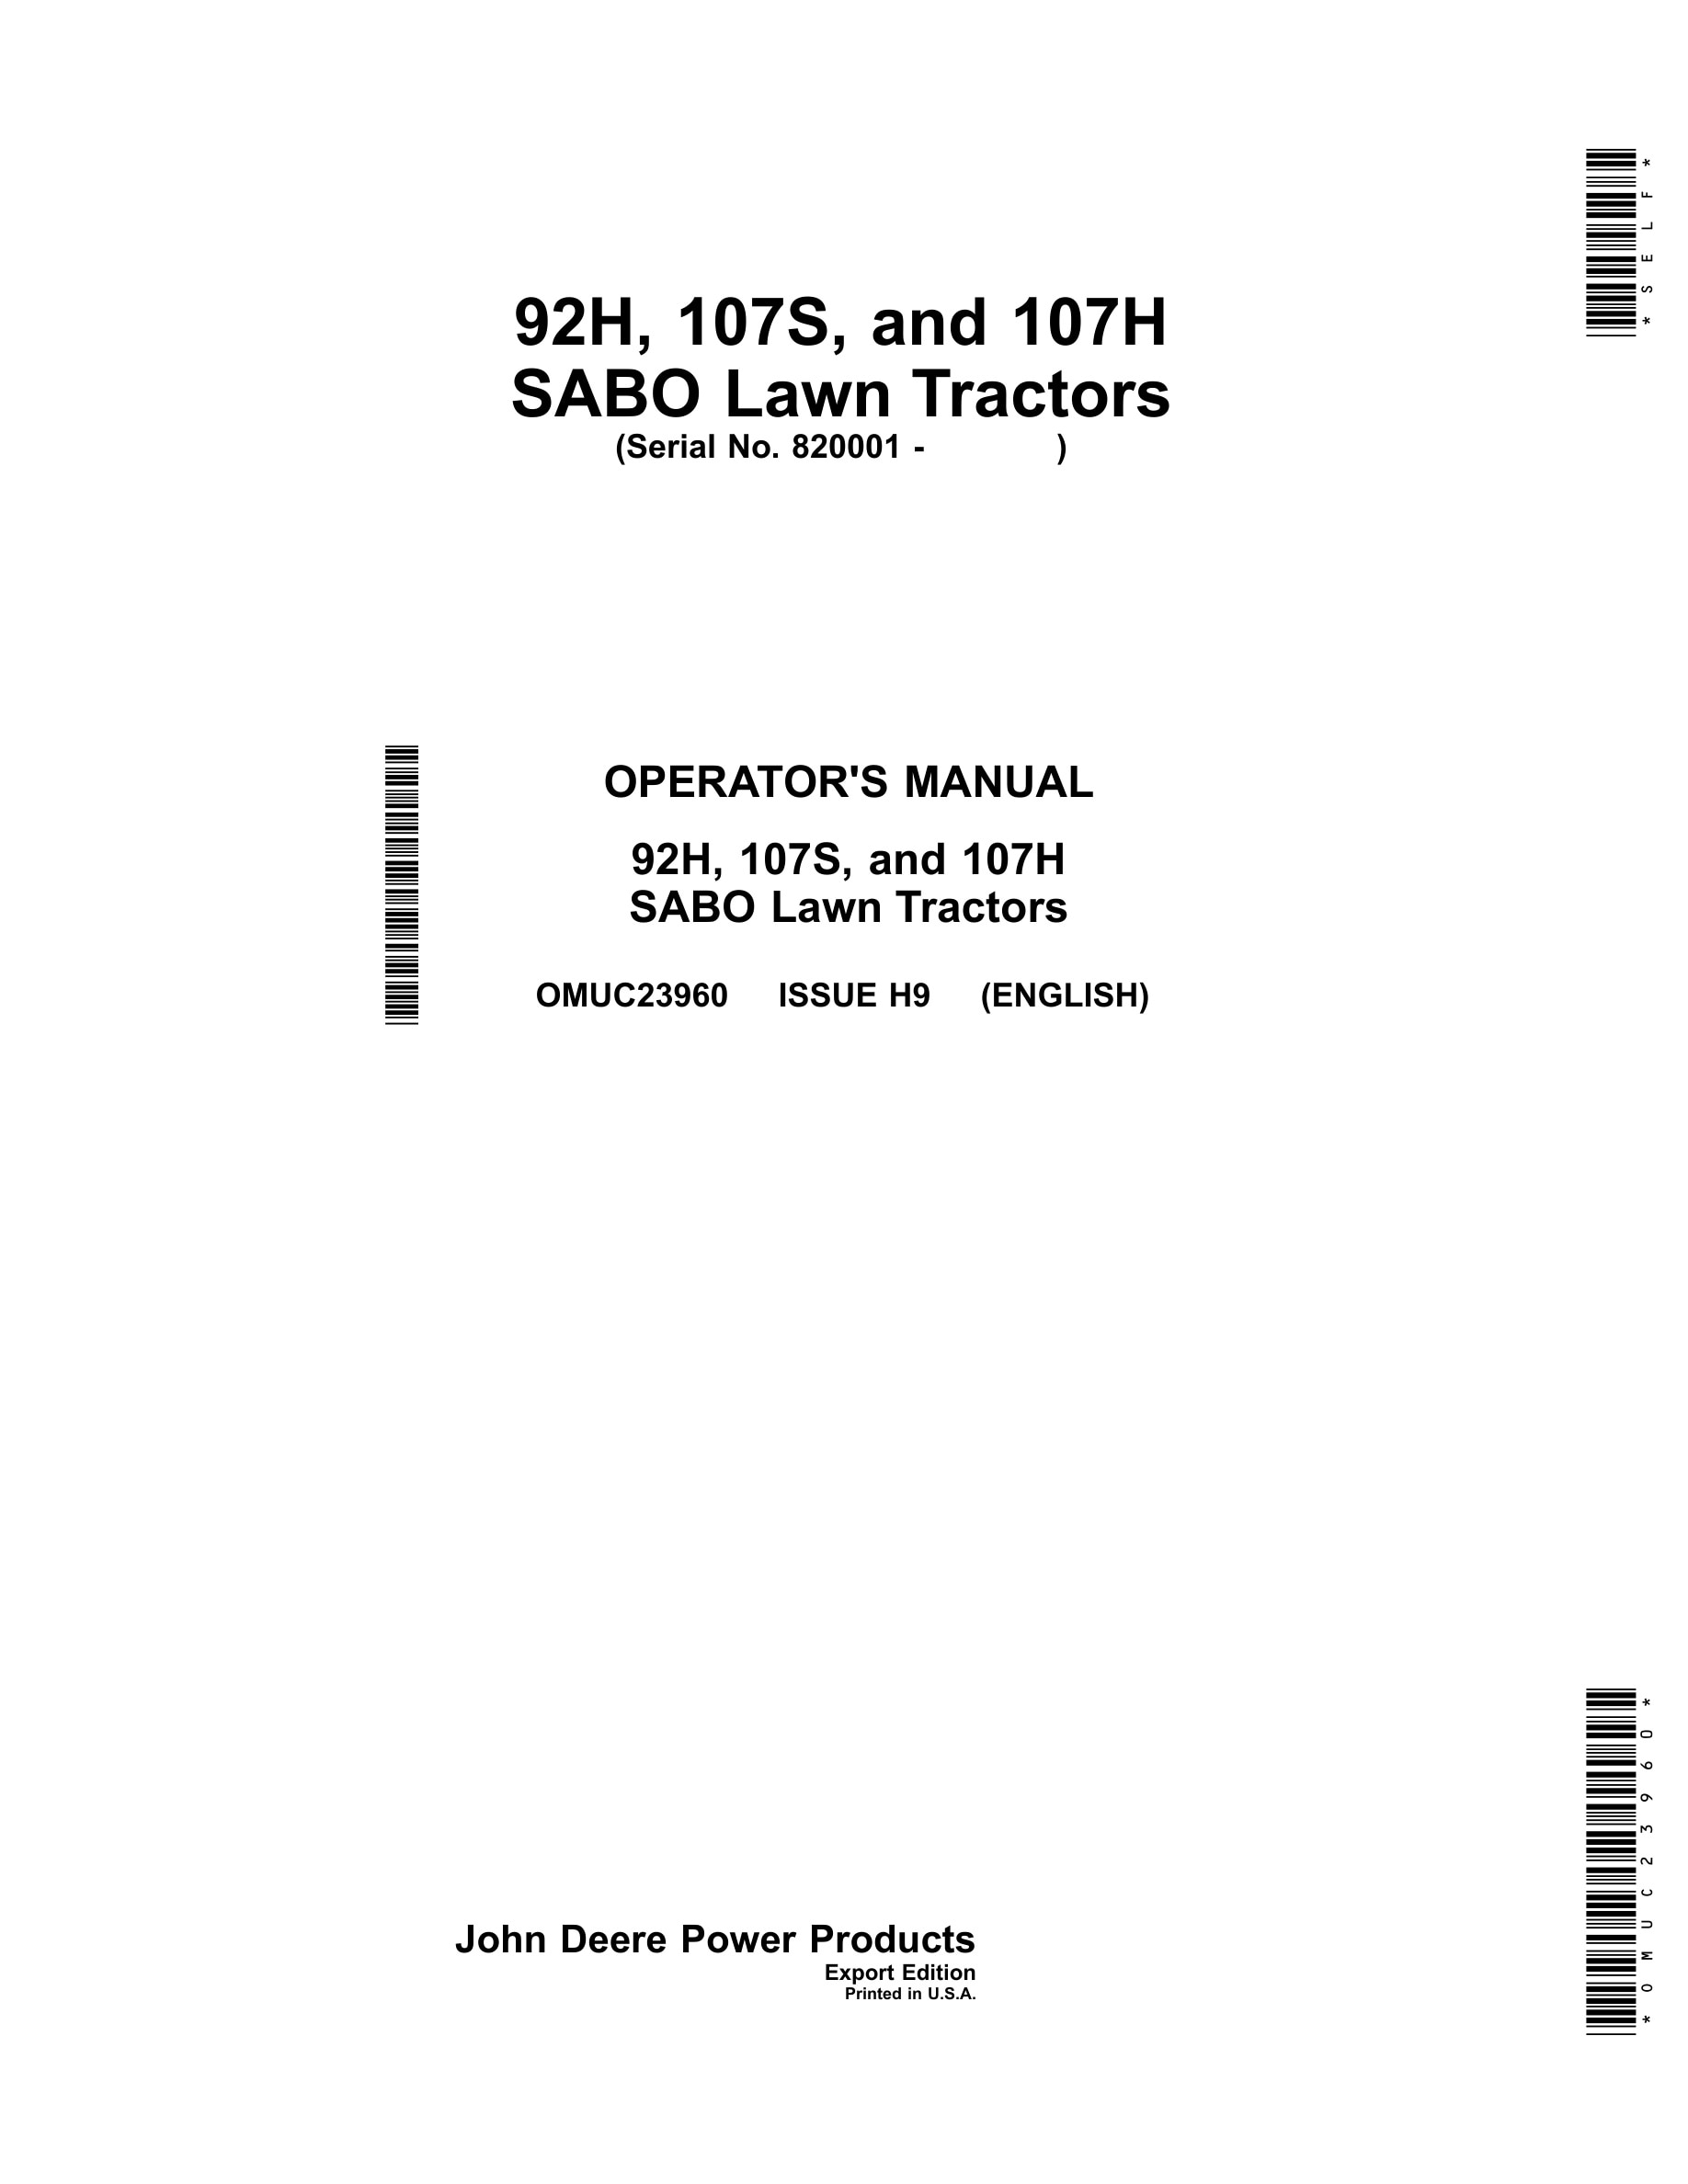 John Deere 92h, 107s, And 107h Sabo Lawn Tractors Operator Manuals OMUC23960-1